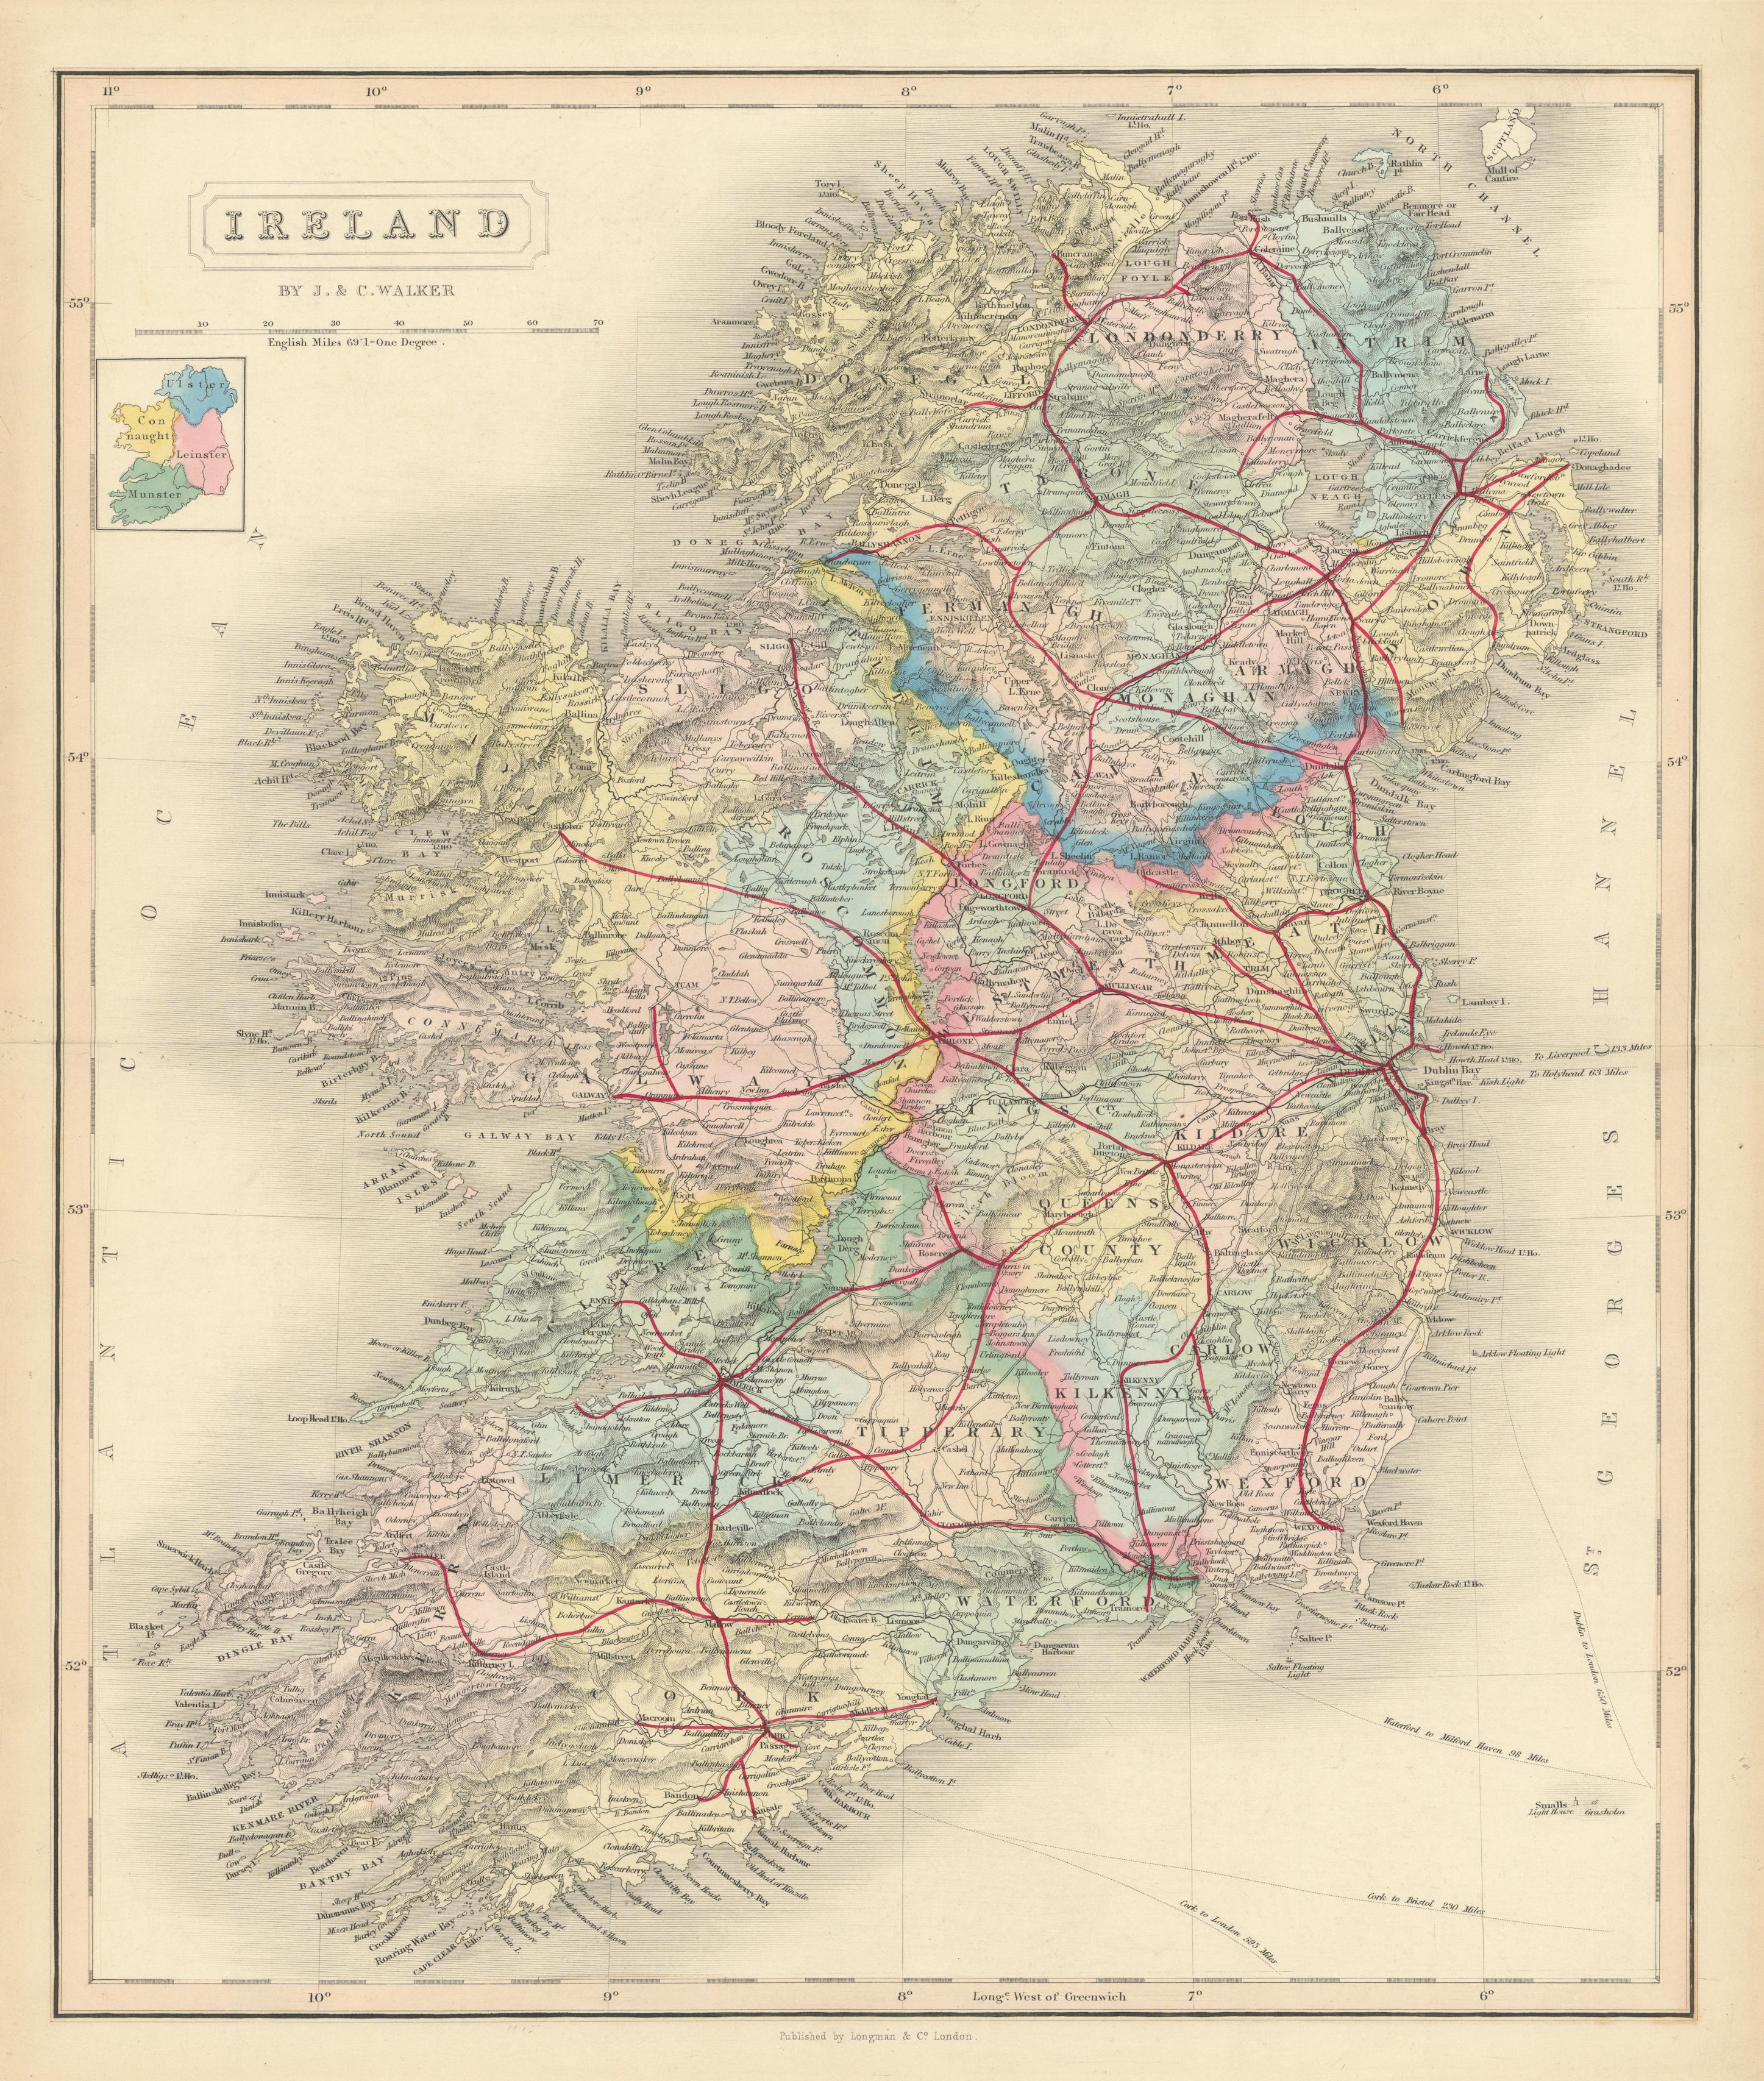 Associate Product Ireland antique map by J & C Walker. Railways, counties & provinces 1870